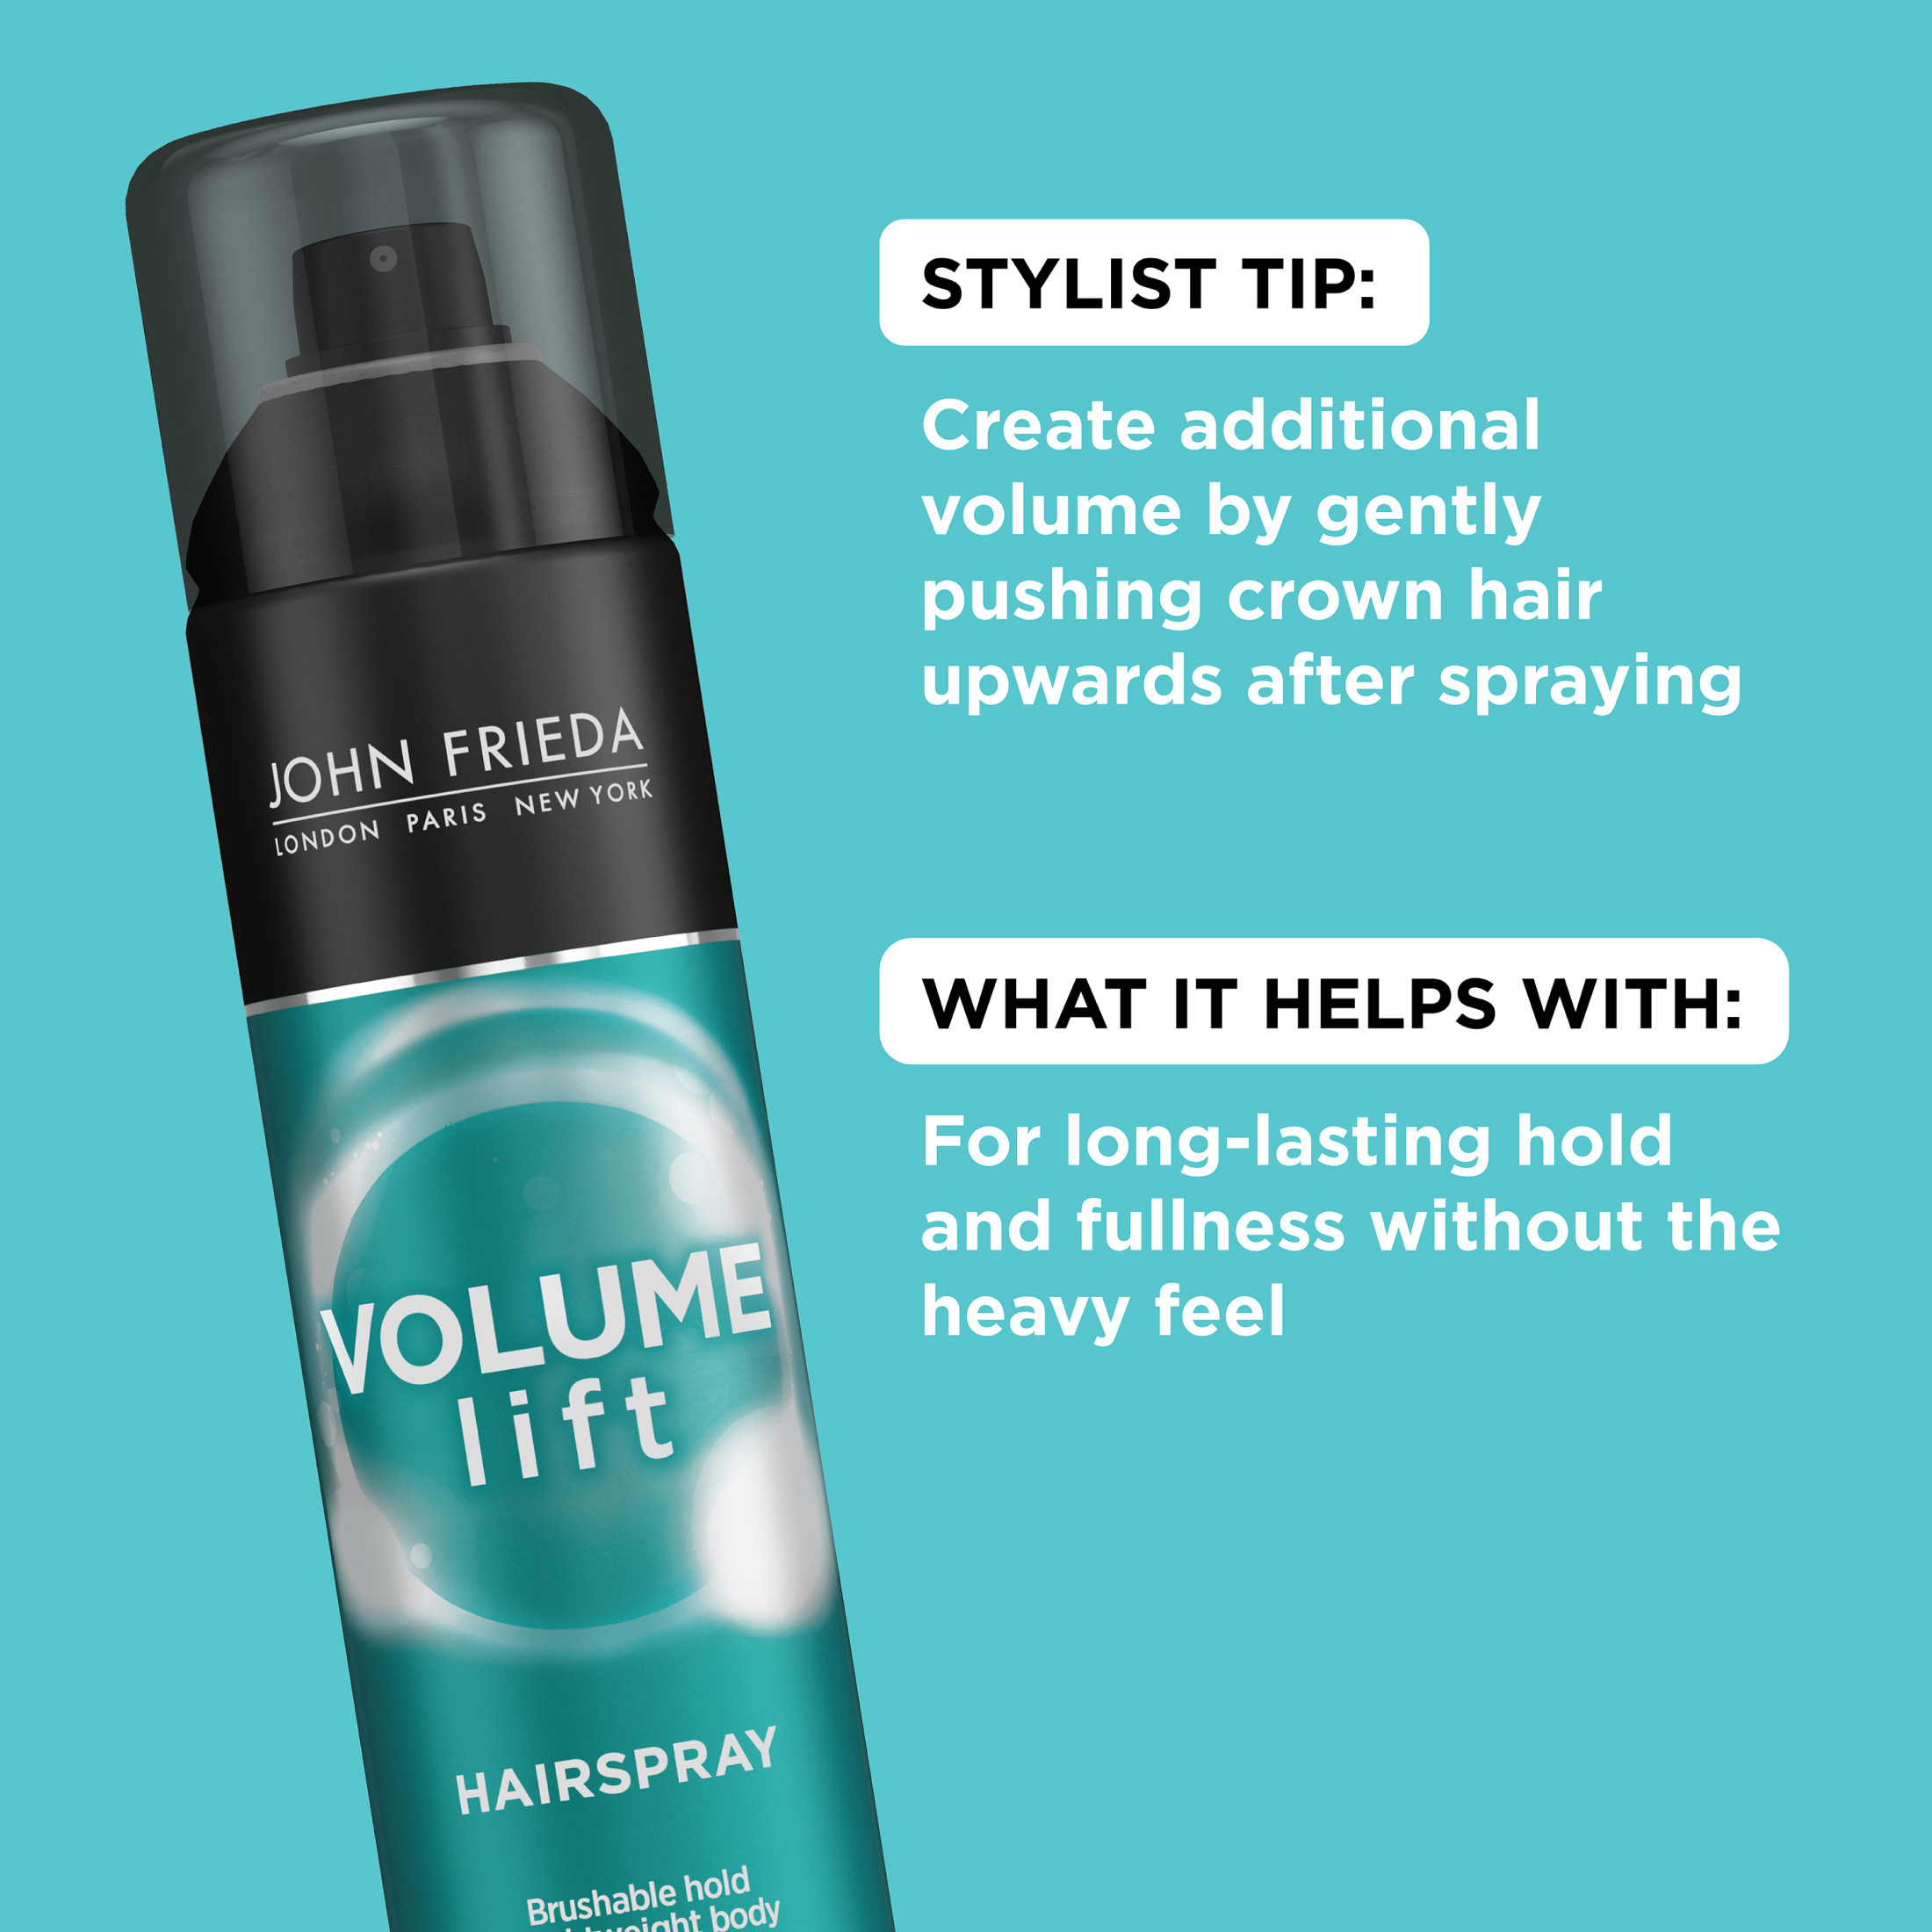 John Frieda Volume Lift Volumizing Hairspray for Fine or Flat Hair, 10 fl oz - image 2 of 4